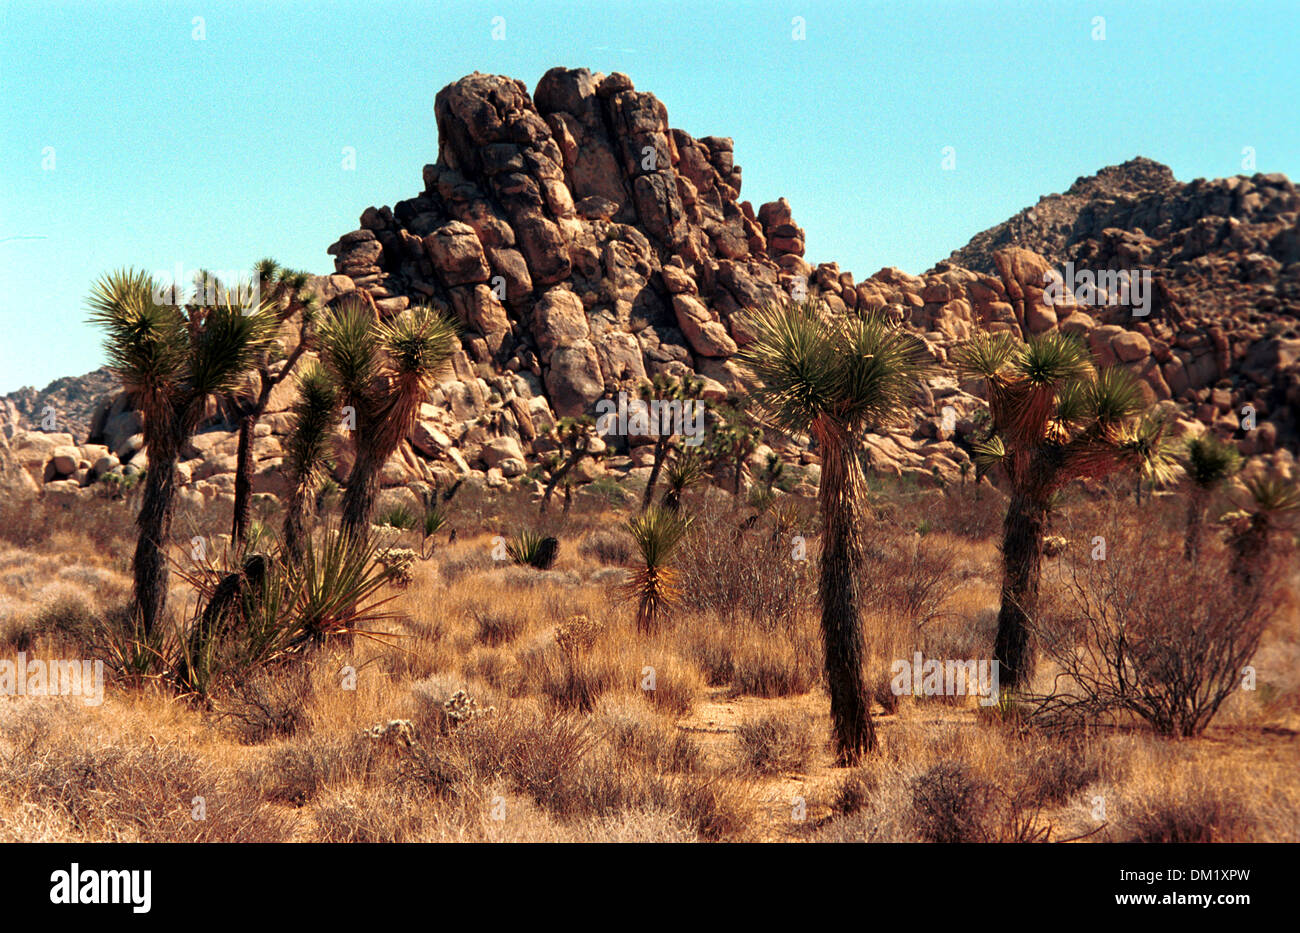 Joshua Trees characteristic of Mojave Desert Southern California, Stock Photo